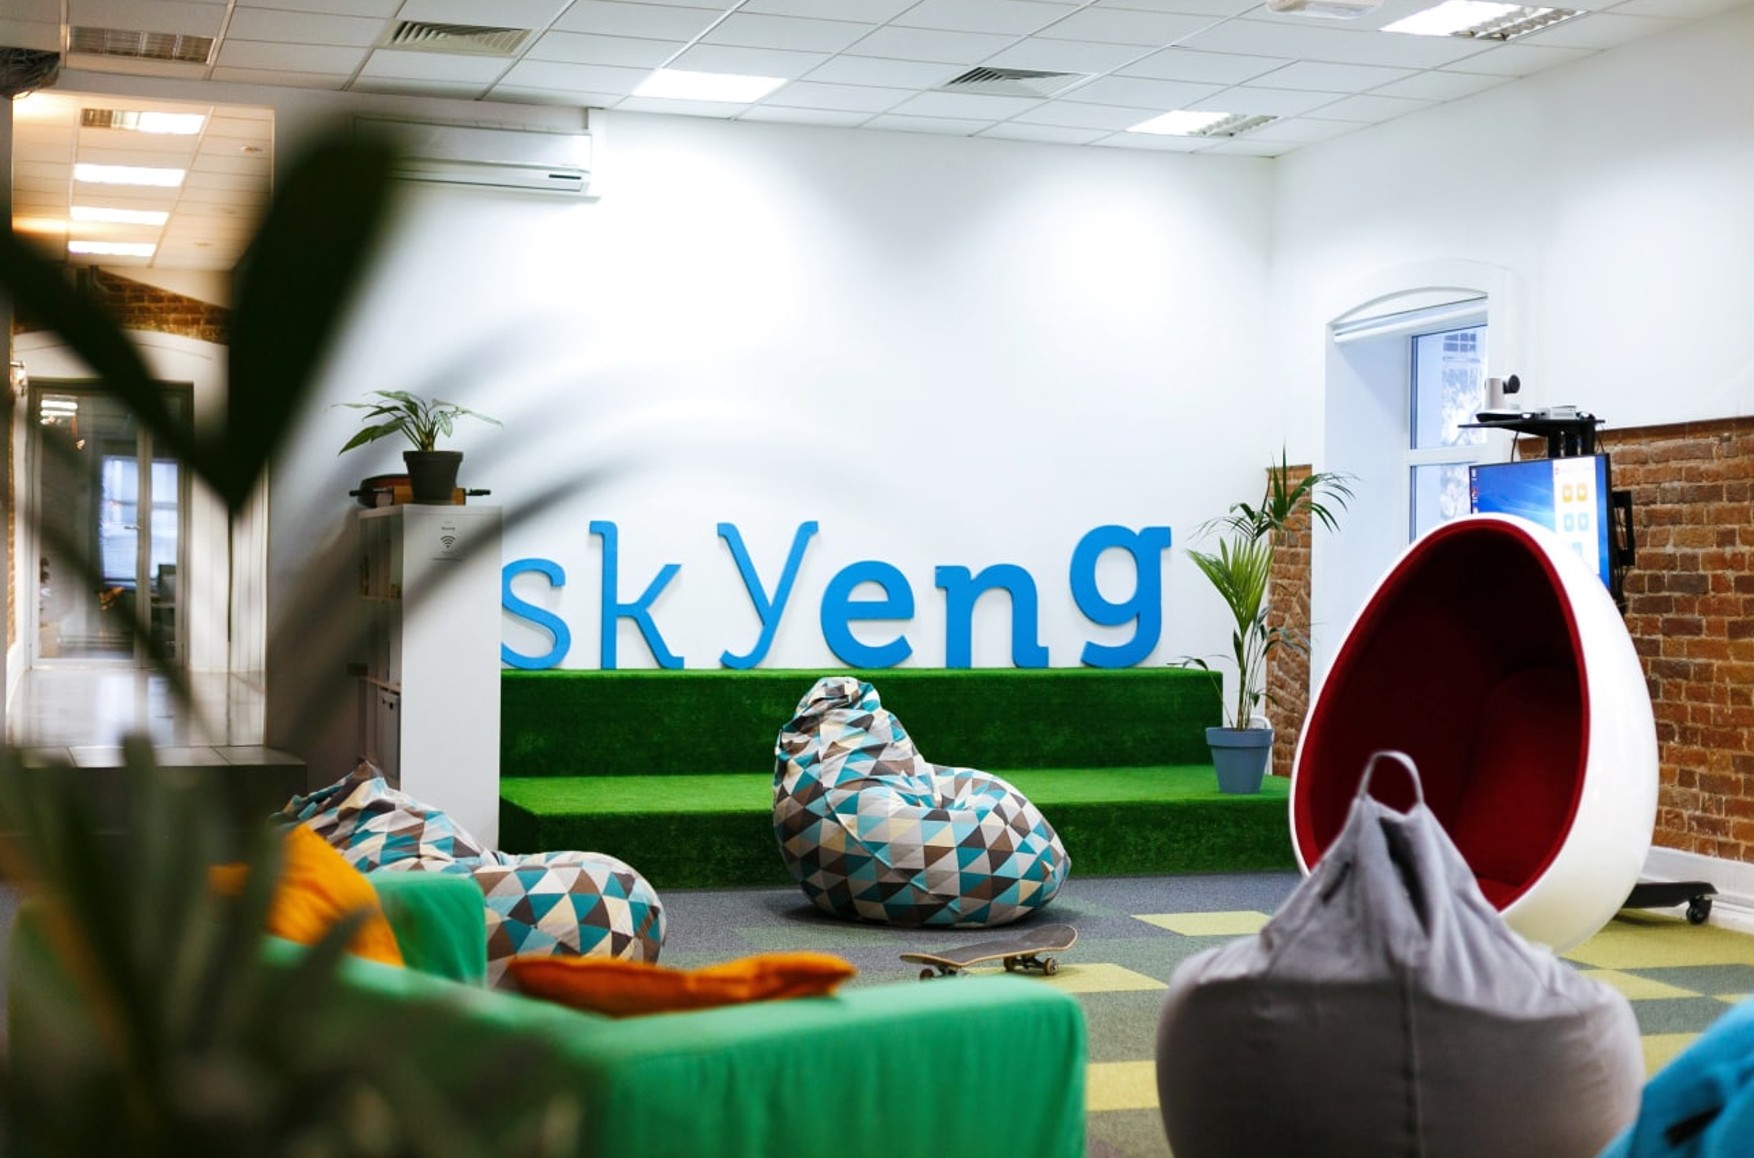 VK претендует на покупку онлайн-школы Skyeng — The Bell